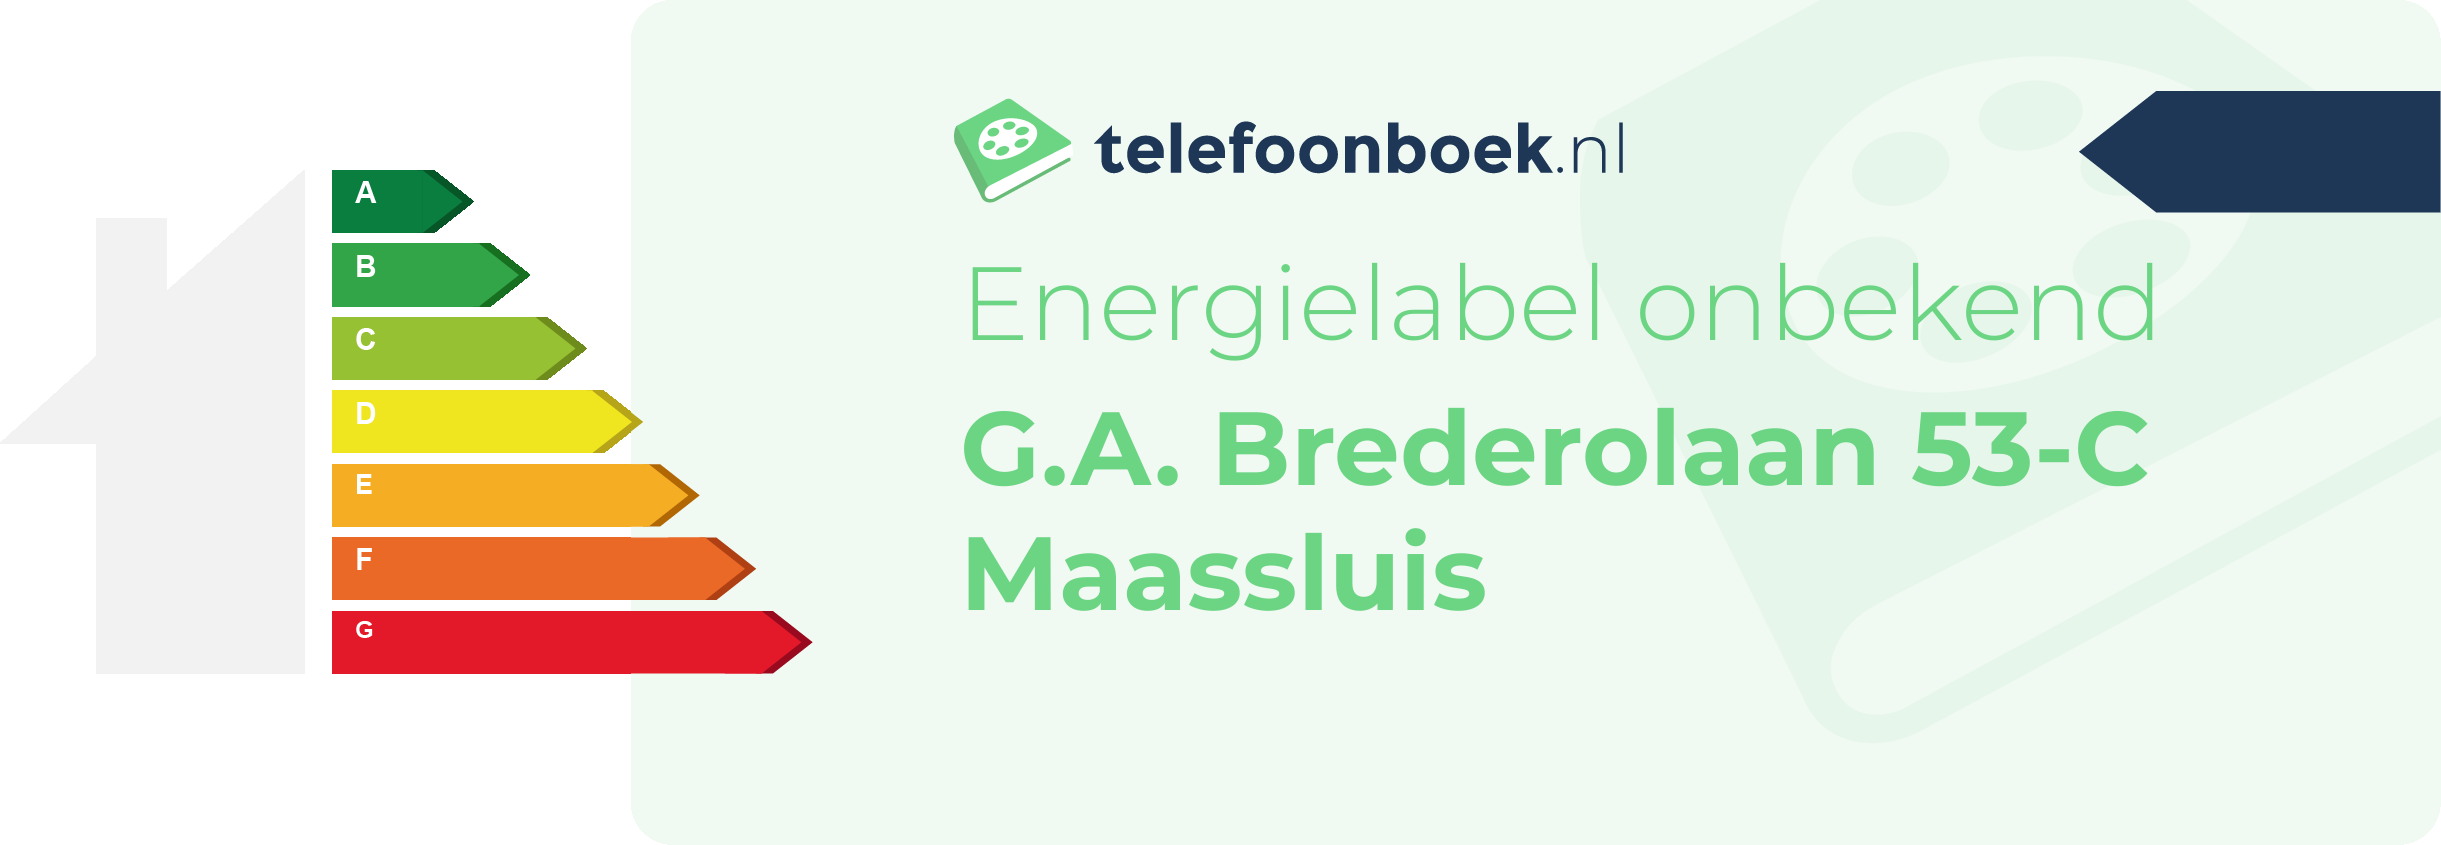 Energielabel G.A. Brederolaan 53-C Maassluis